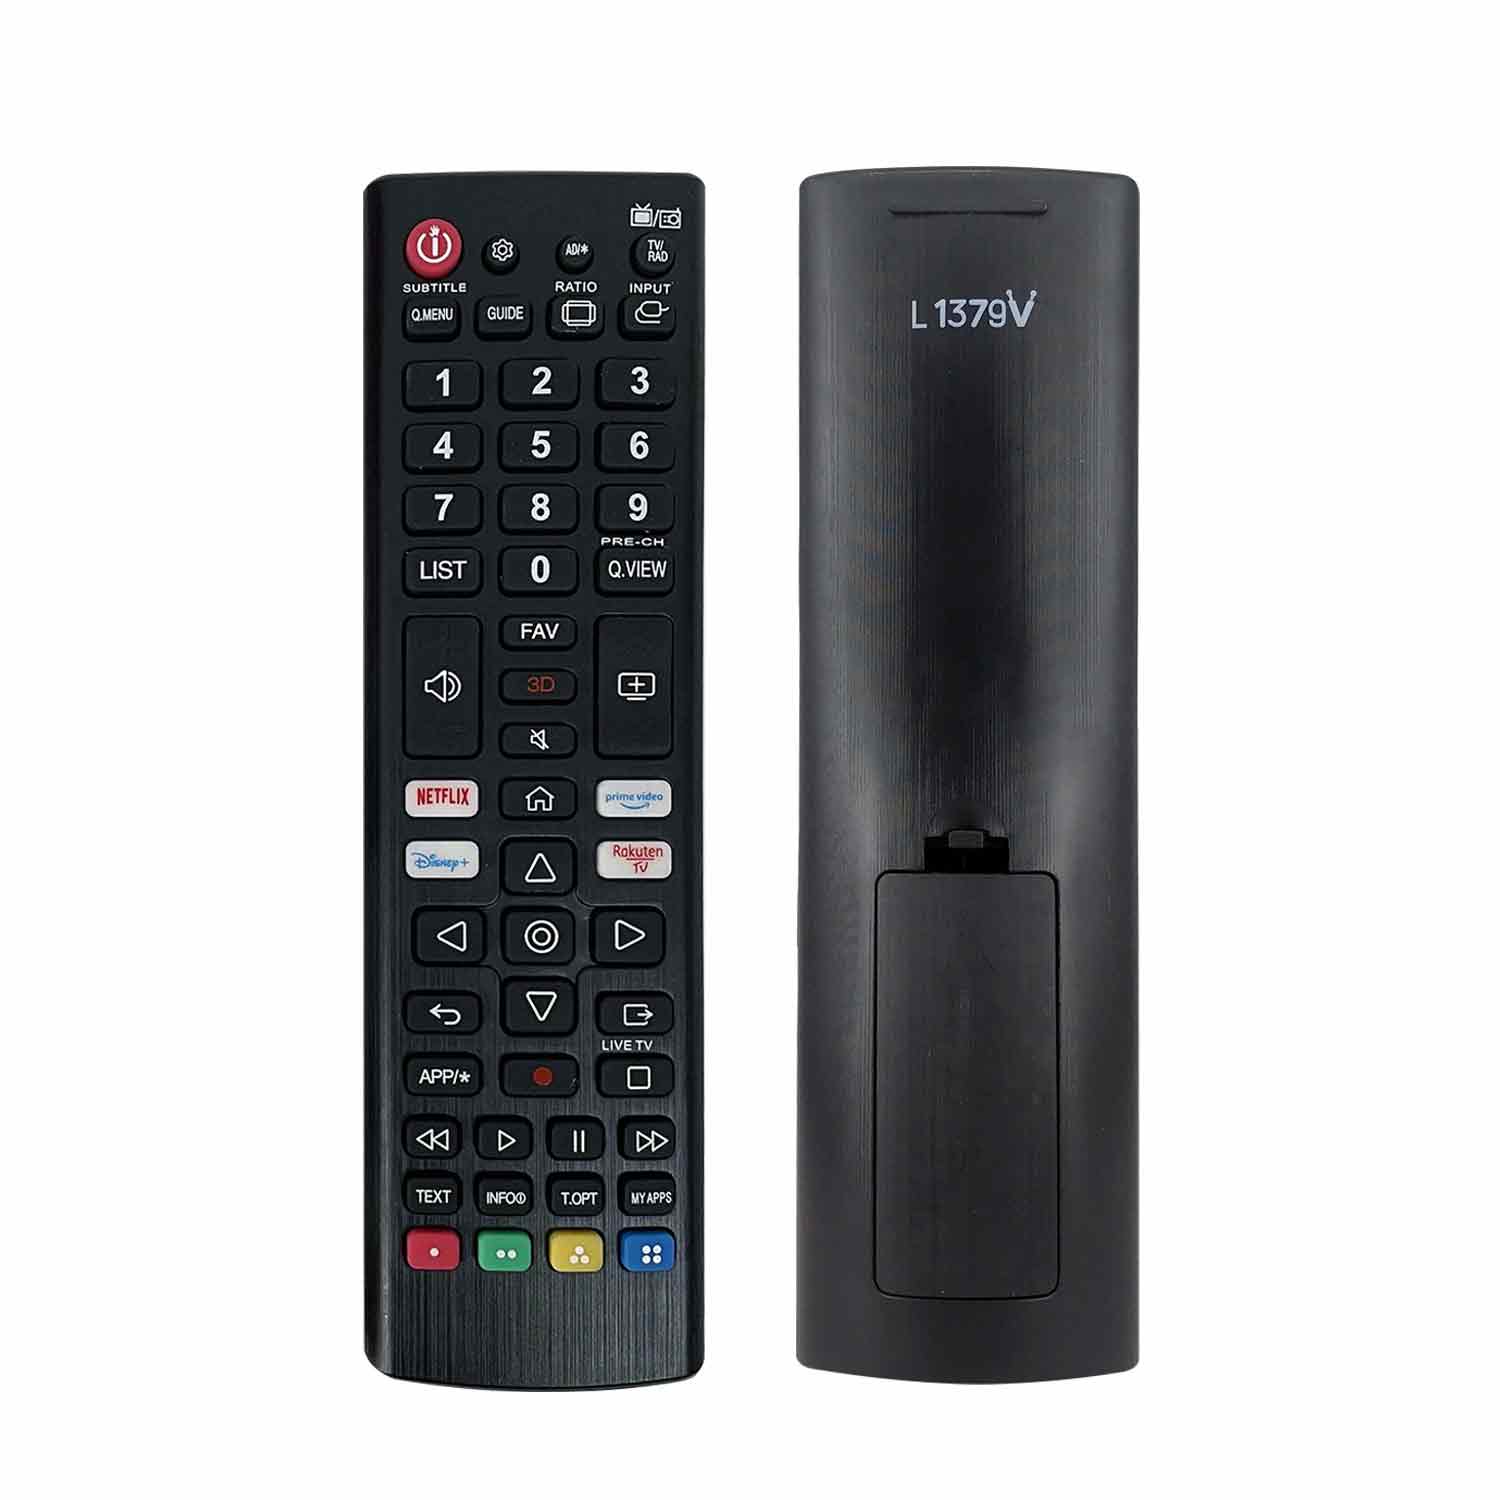 LG TV Compatible Remote - L1379 LCD LED TV Universal Remote Control